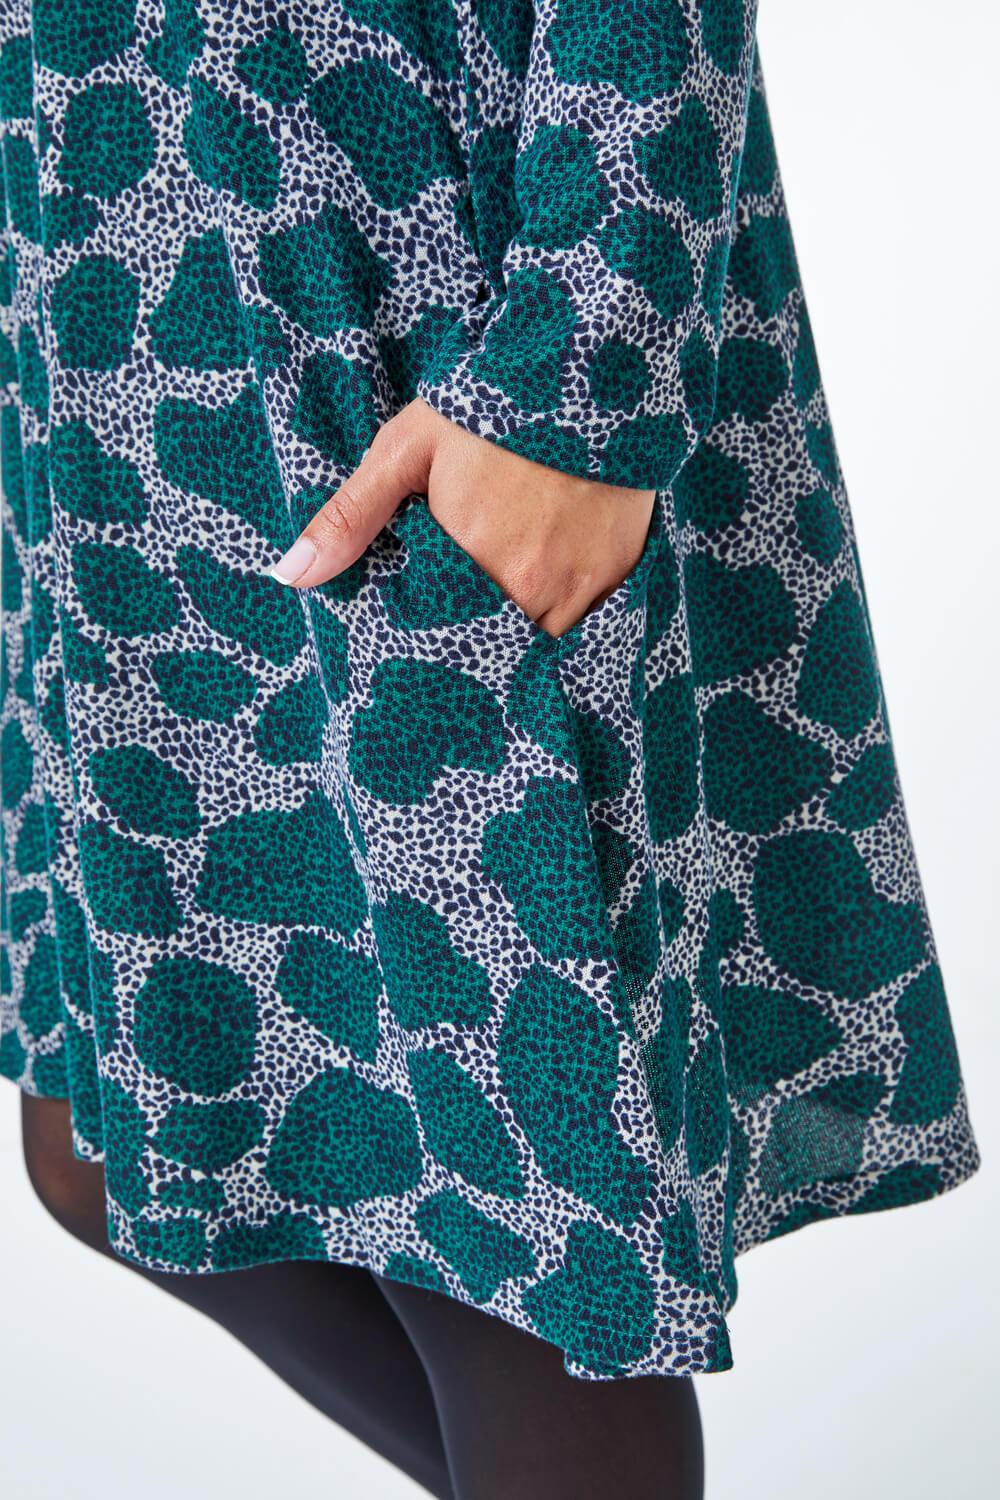 Teal Petite Leopard Print Mini Swing Dress, Image 5 of 5